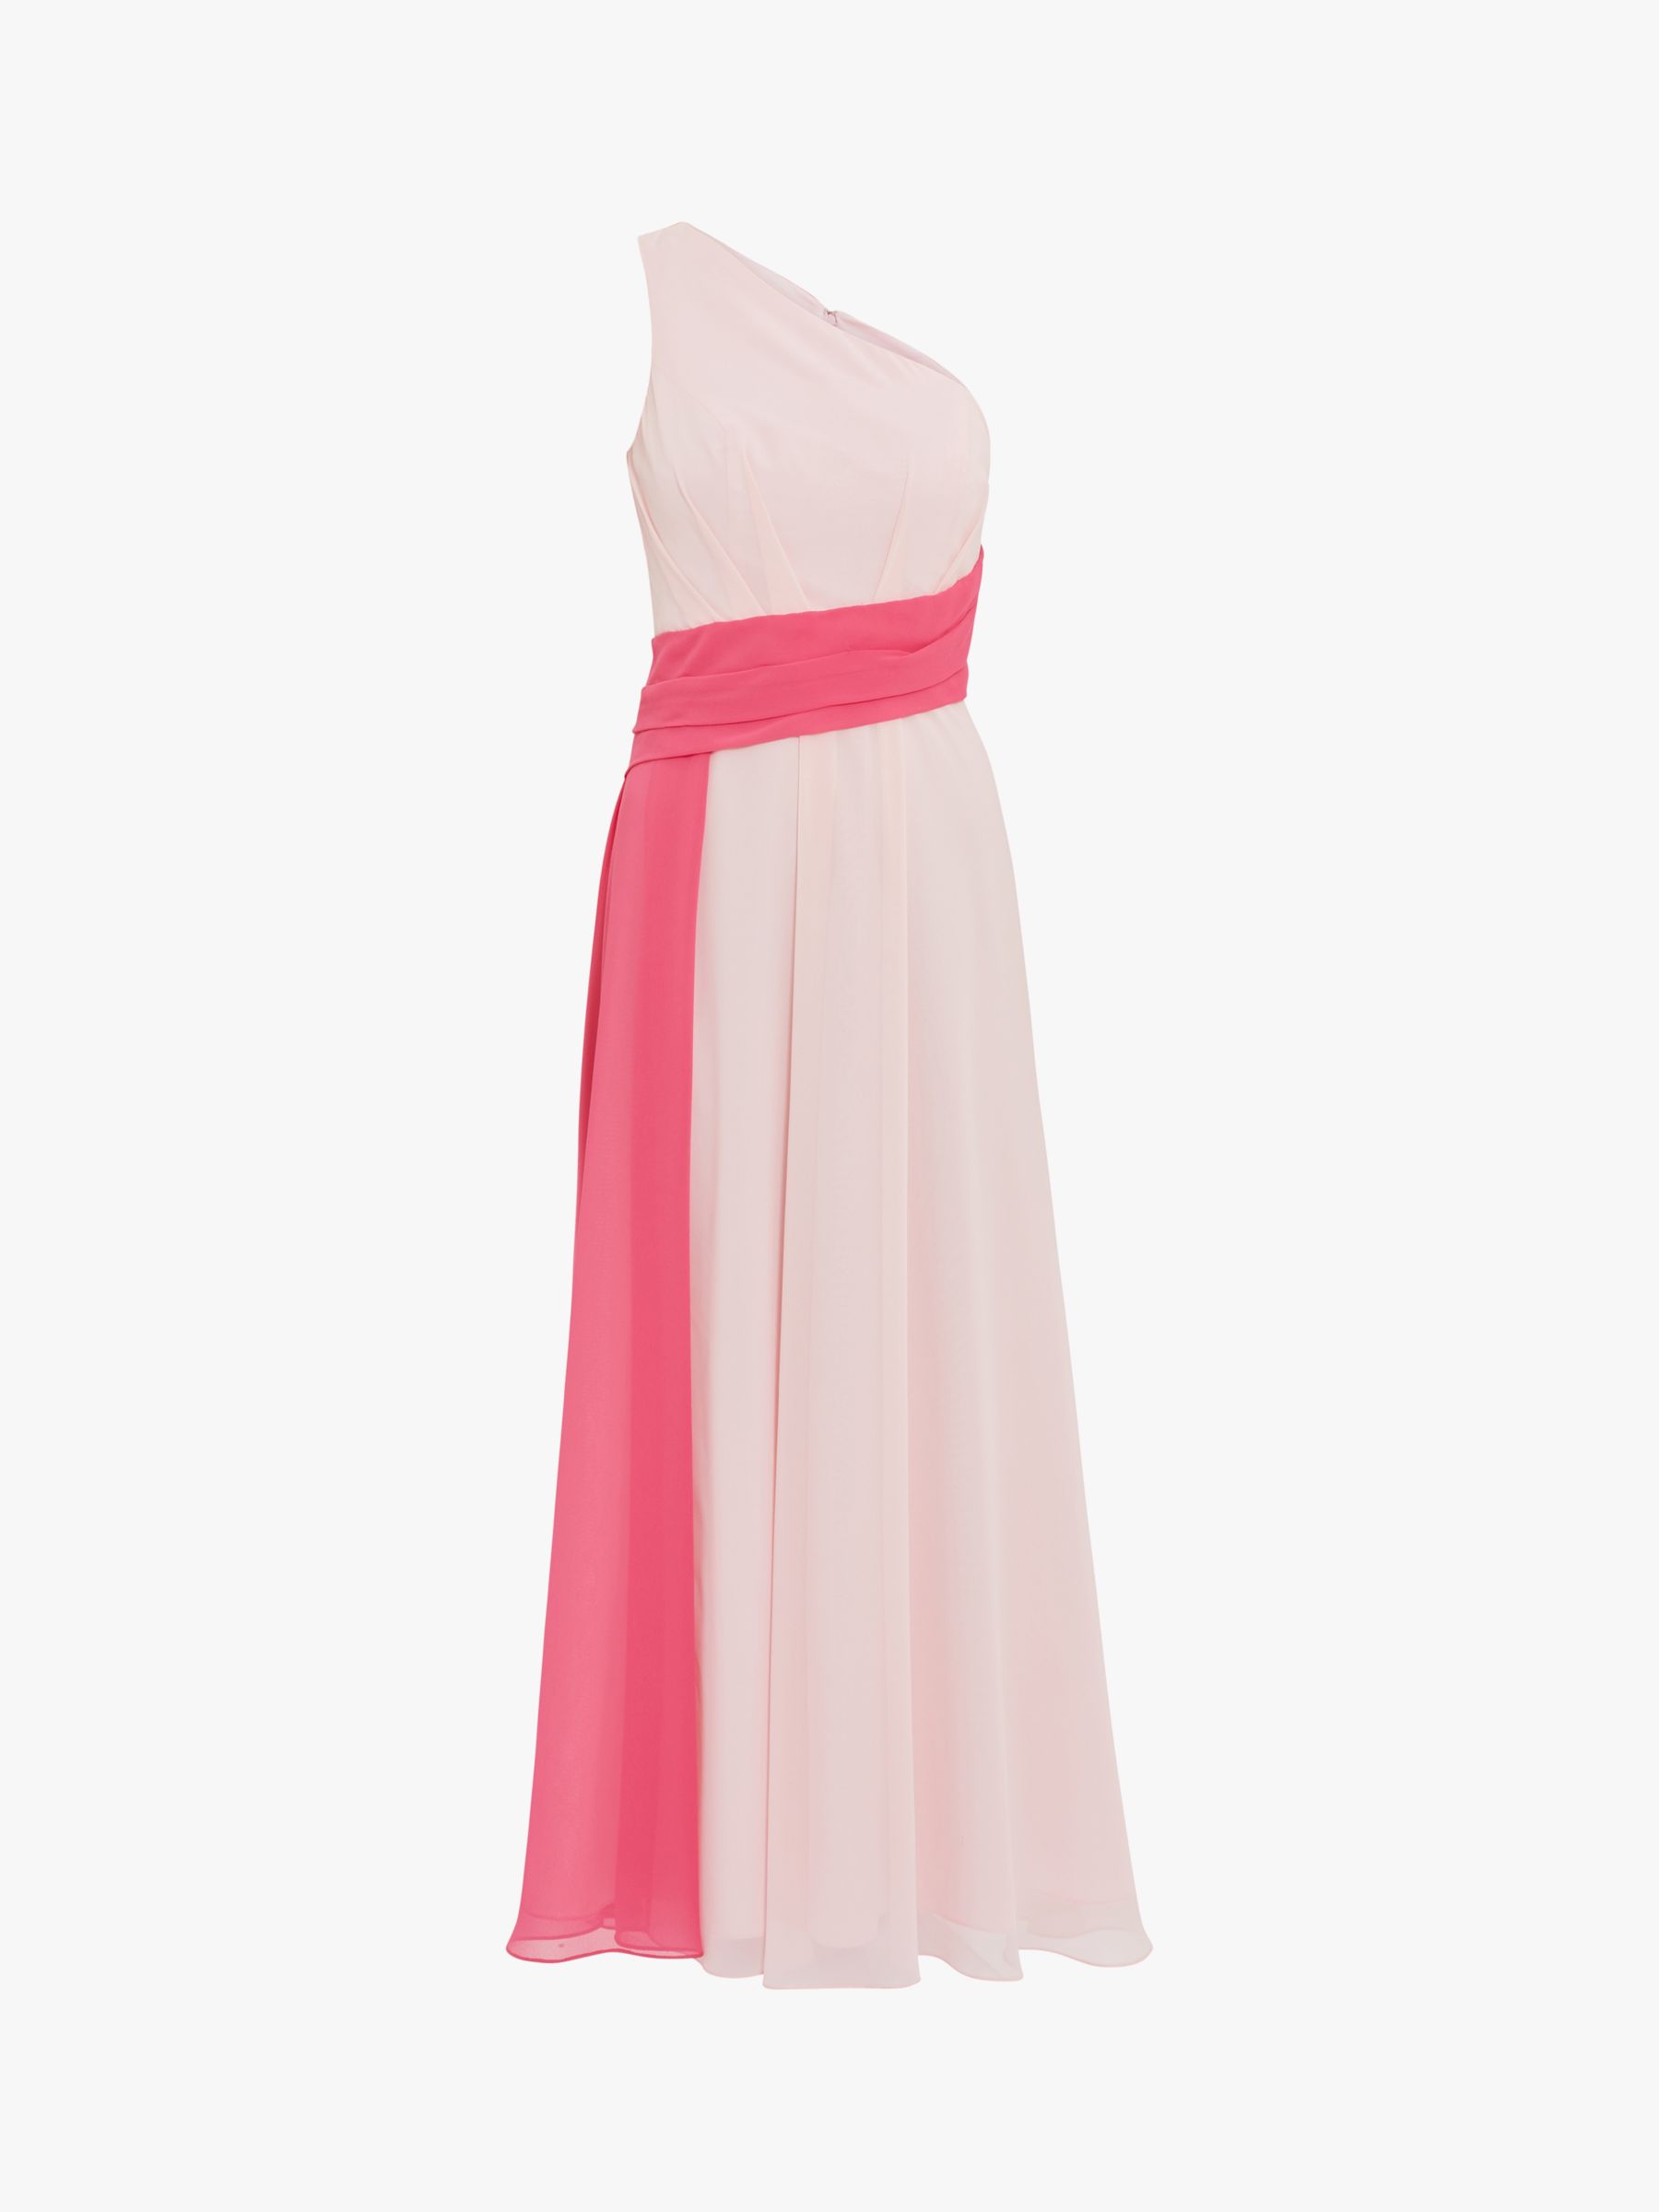 Buy Gina Bacconi Doreen Chiffon One Shoulder Dress Online at johnlewis.com